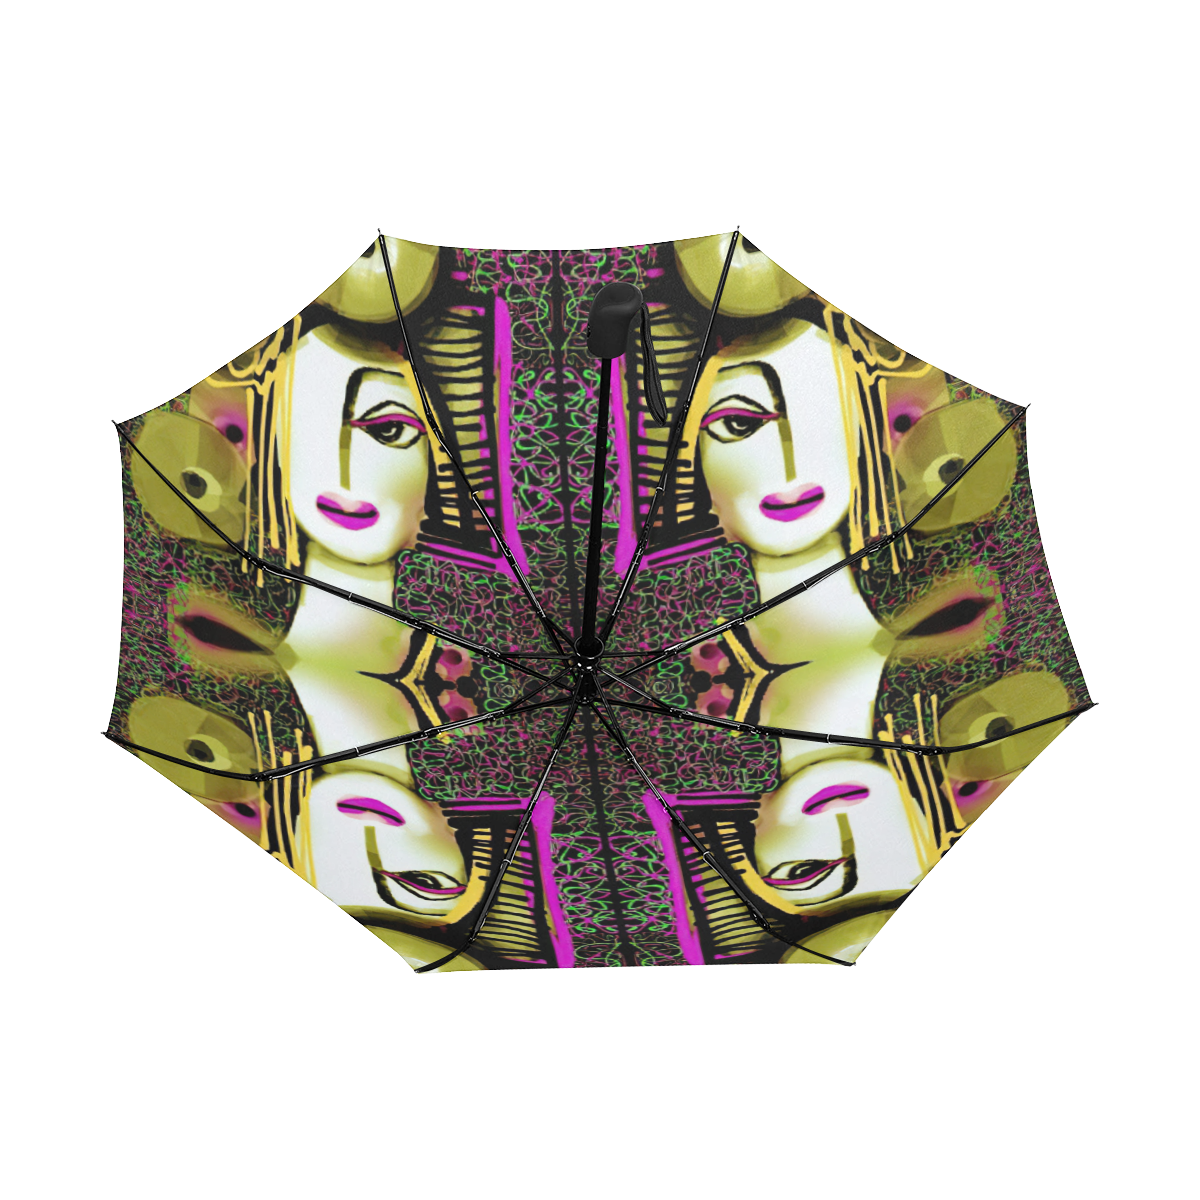 Ladies with Hats - Yellow Anti-UV Auto-Foldable Umbrella (Underside Printing) (U06)